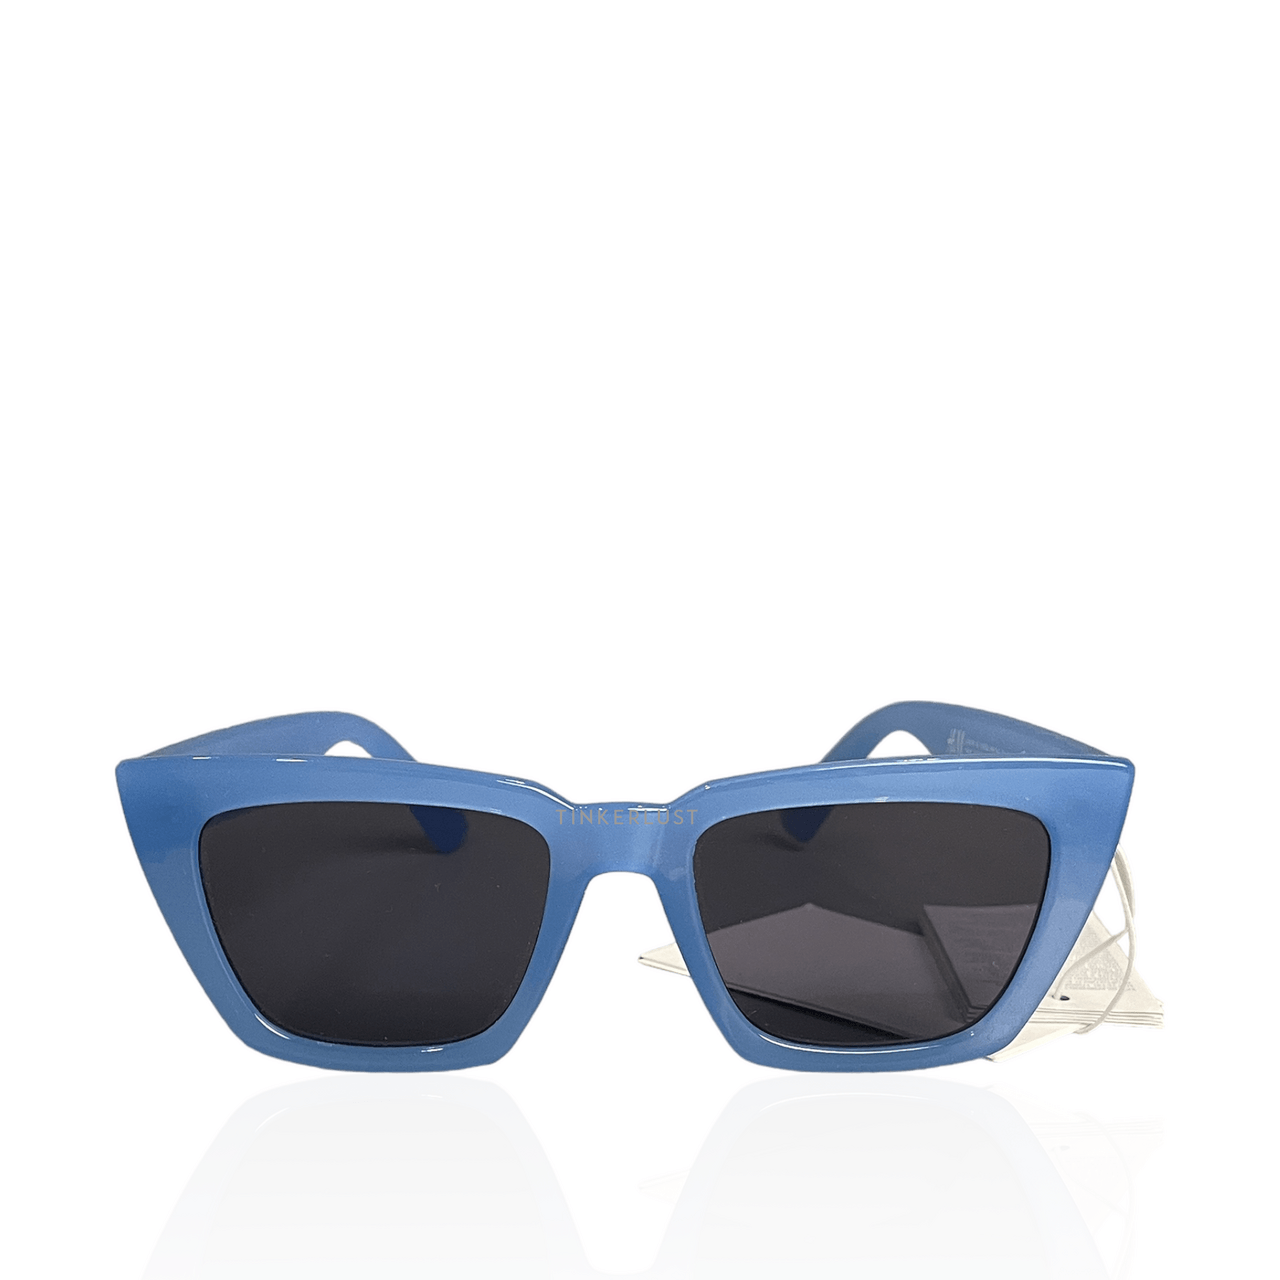 H&M Blue Sunglasses